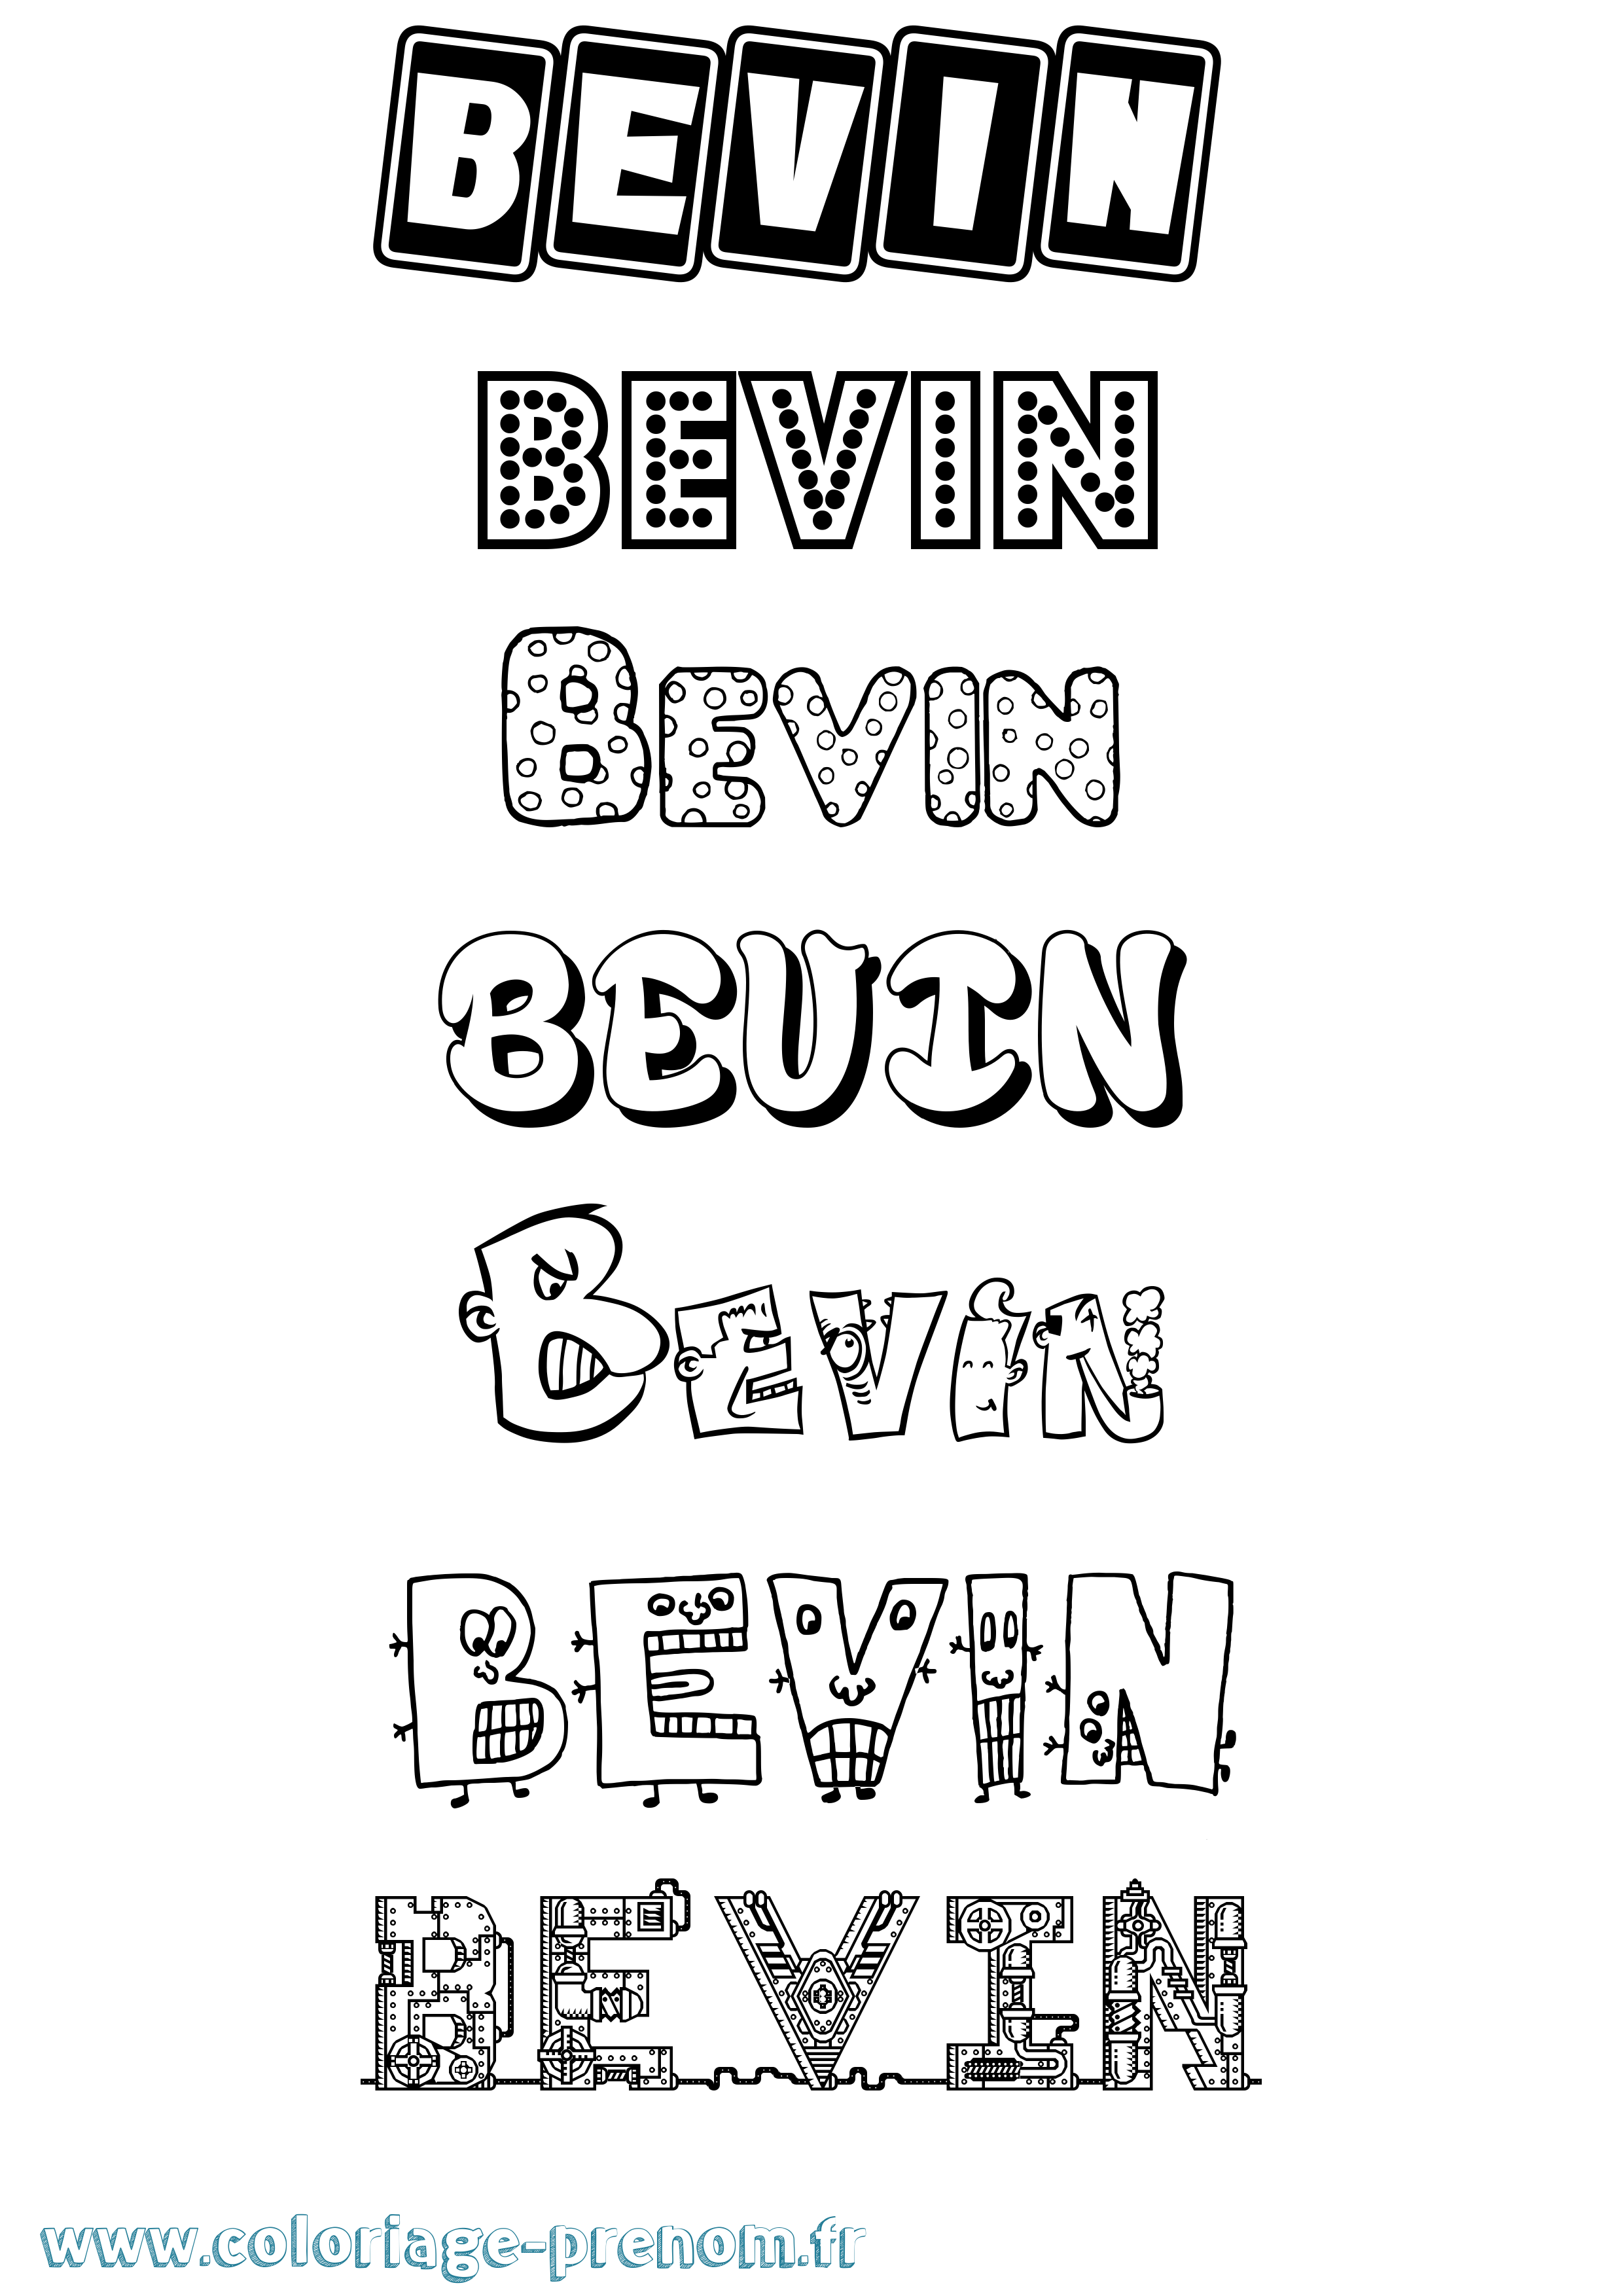 Coloriage prénom Bevin Fun